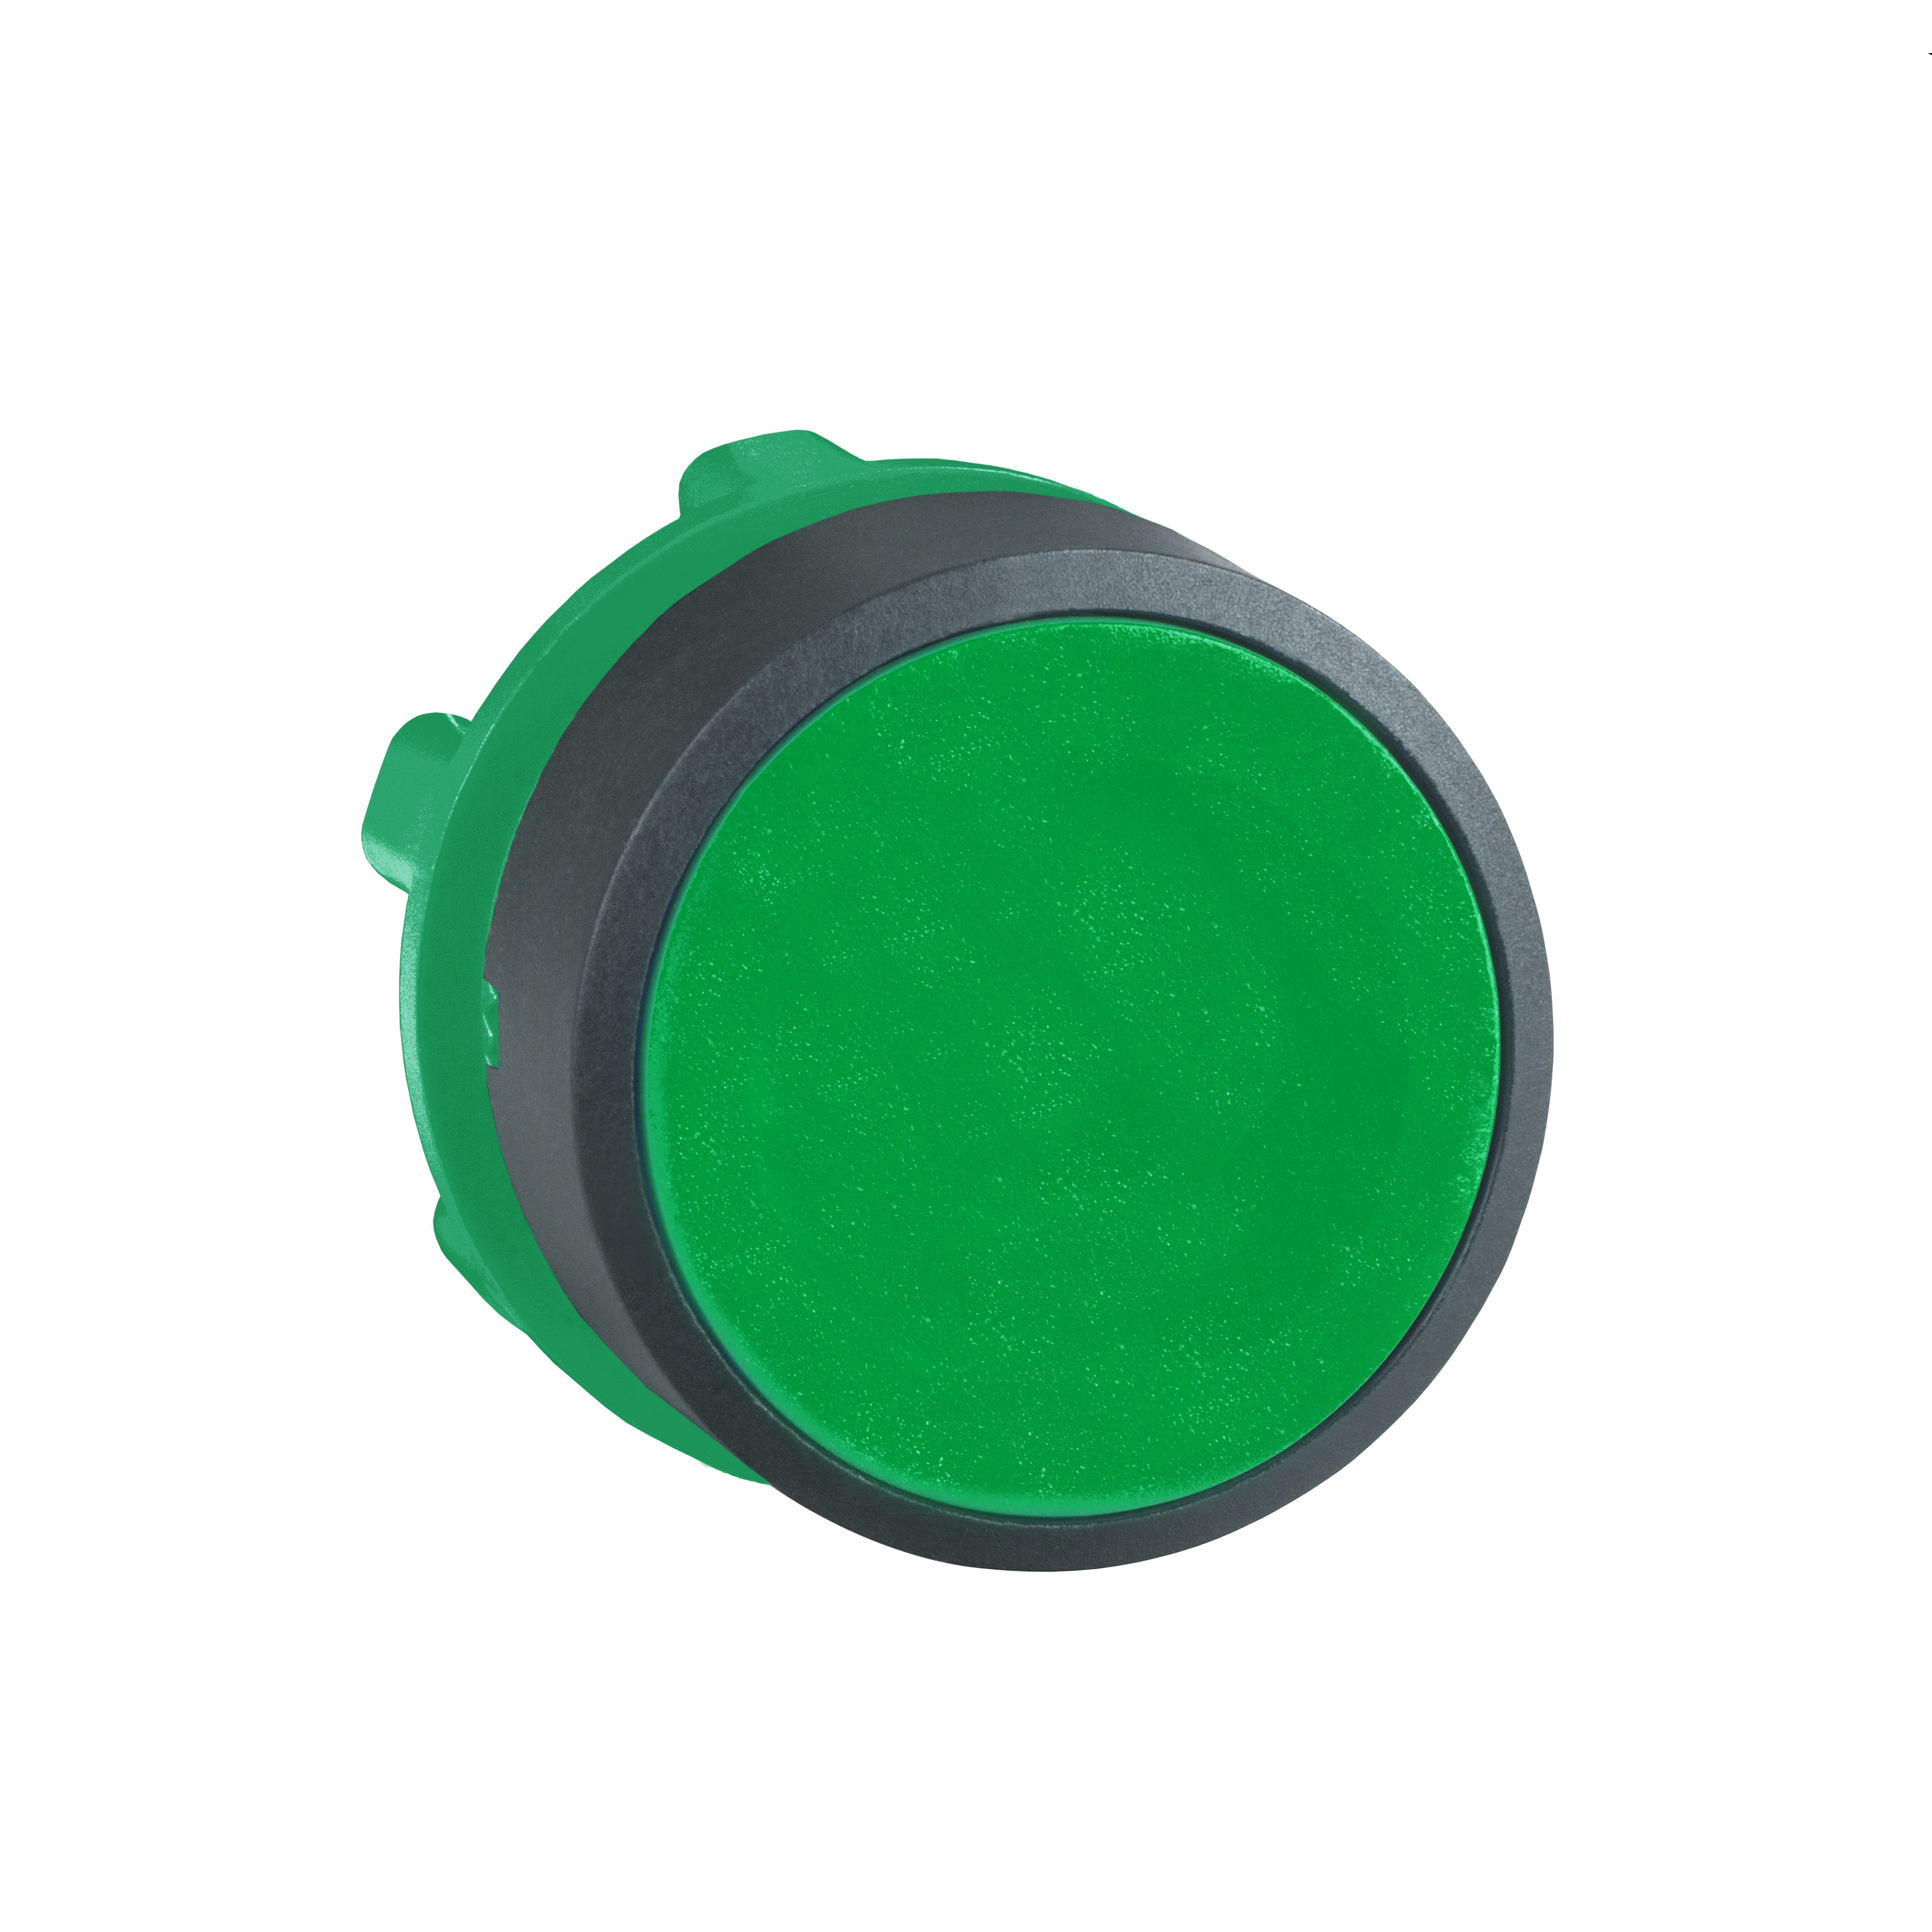 ZB5AA3 - Harmony XB5, Push button head, plastic, flush, green, Ø22, spring return, unmarked